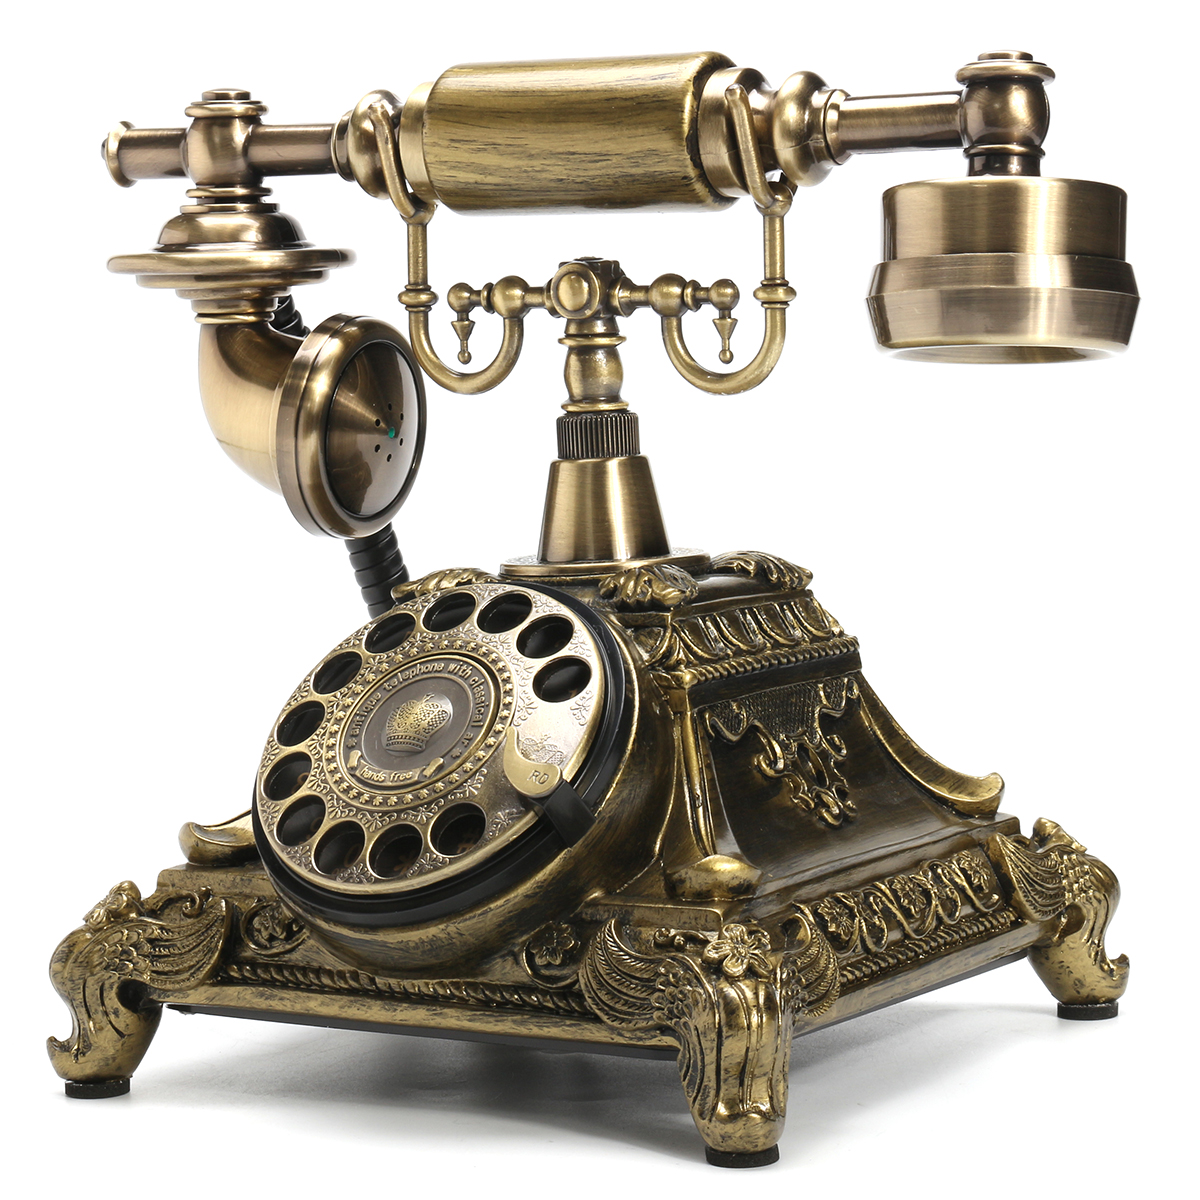 Antique Telephone Dial Desk Phone Home